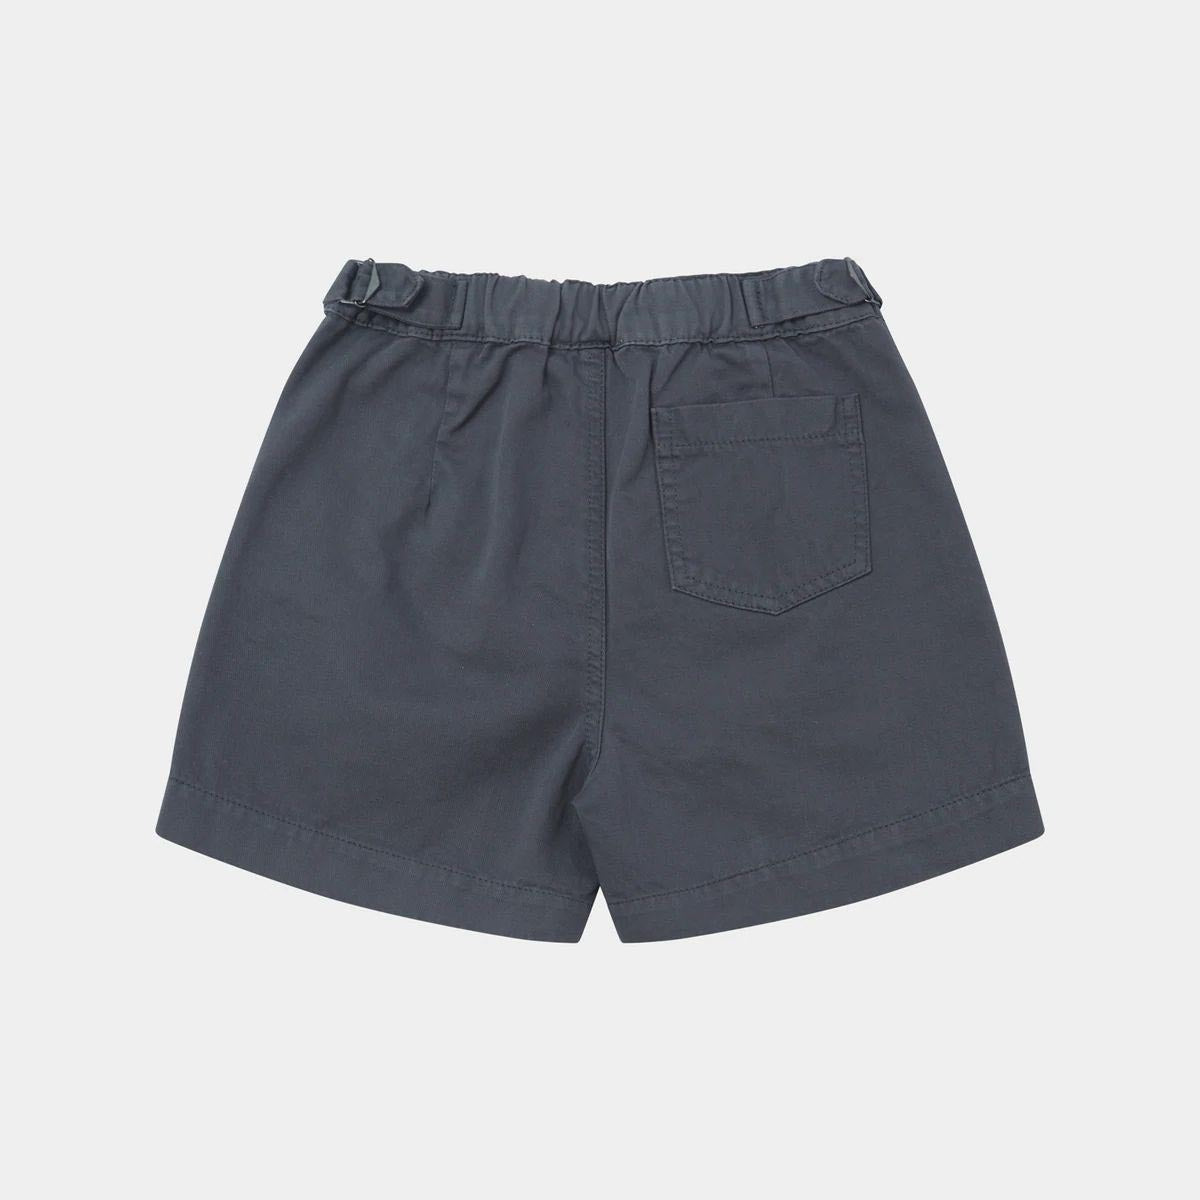 Boys & Girls Dark Grey Cotton Shorts